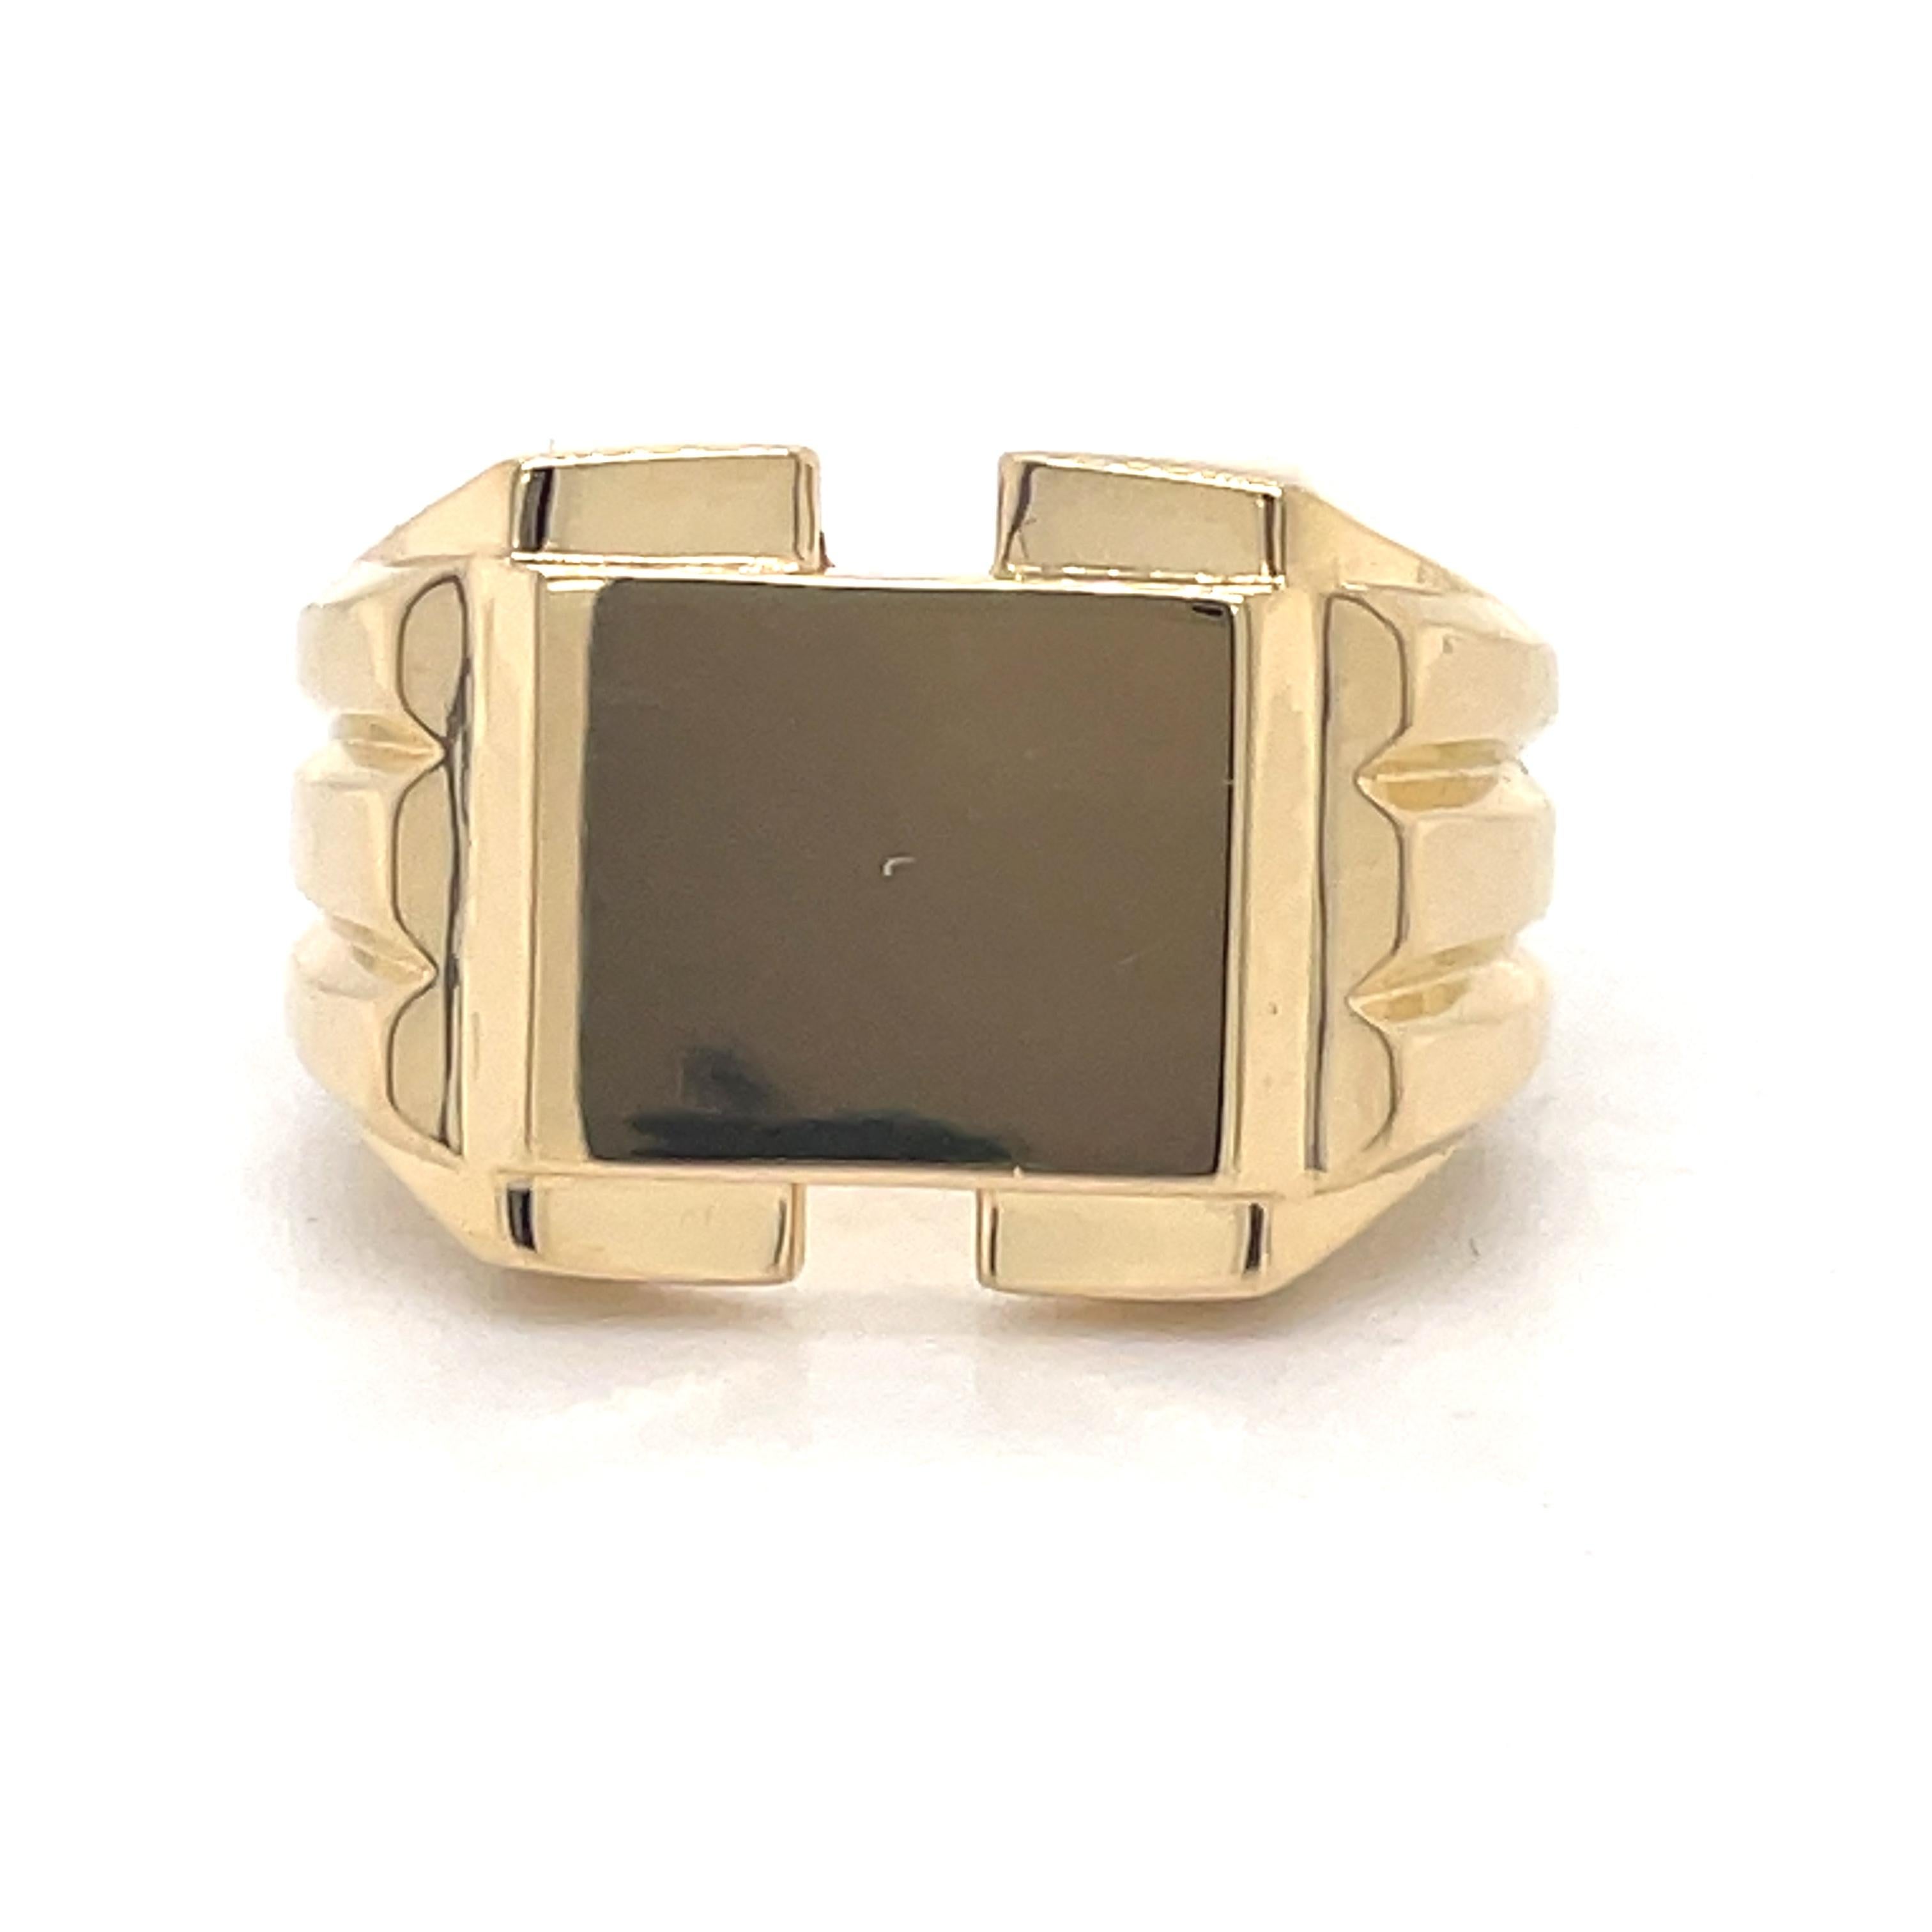 Unisex Gold Signet Ring, Vintage Style Ring, 14k Yellow Gold, made to order ring, Unisex Gold Seal Ring Vintage Style Ring Solid 14k Yellow Gold, Chunky Statement Ring, Signet ring men, Customized signet ring for women Free Ring Resizing
 


~~ S e